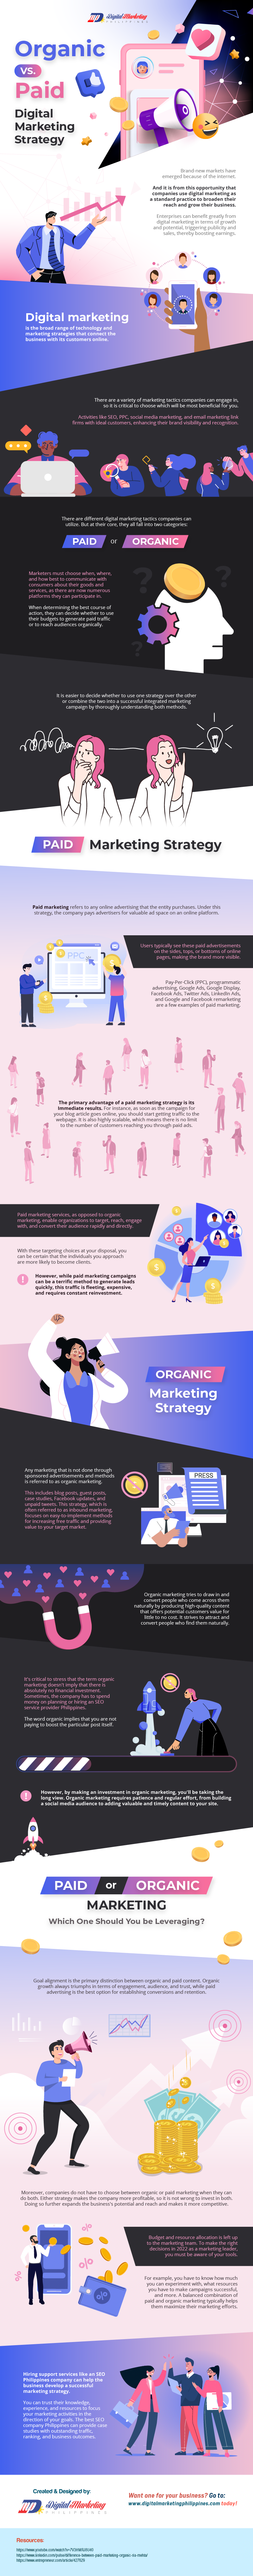 Organic Vs. Paid Digital Marketing